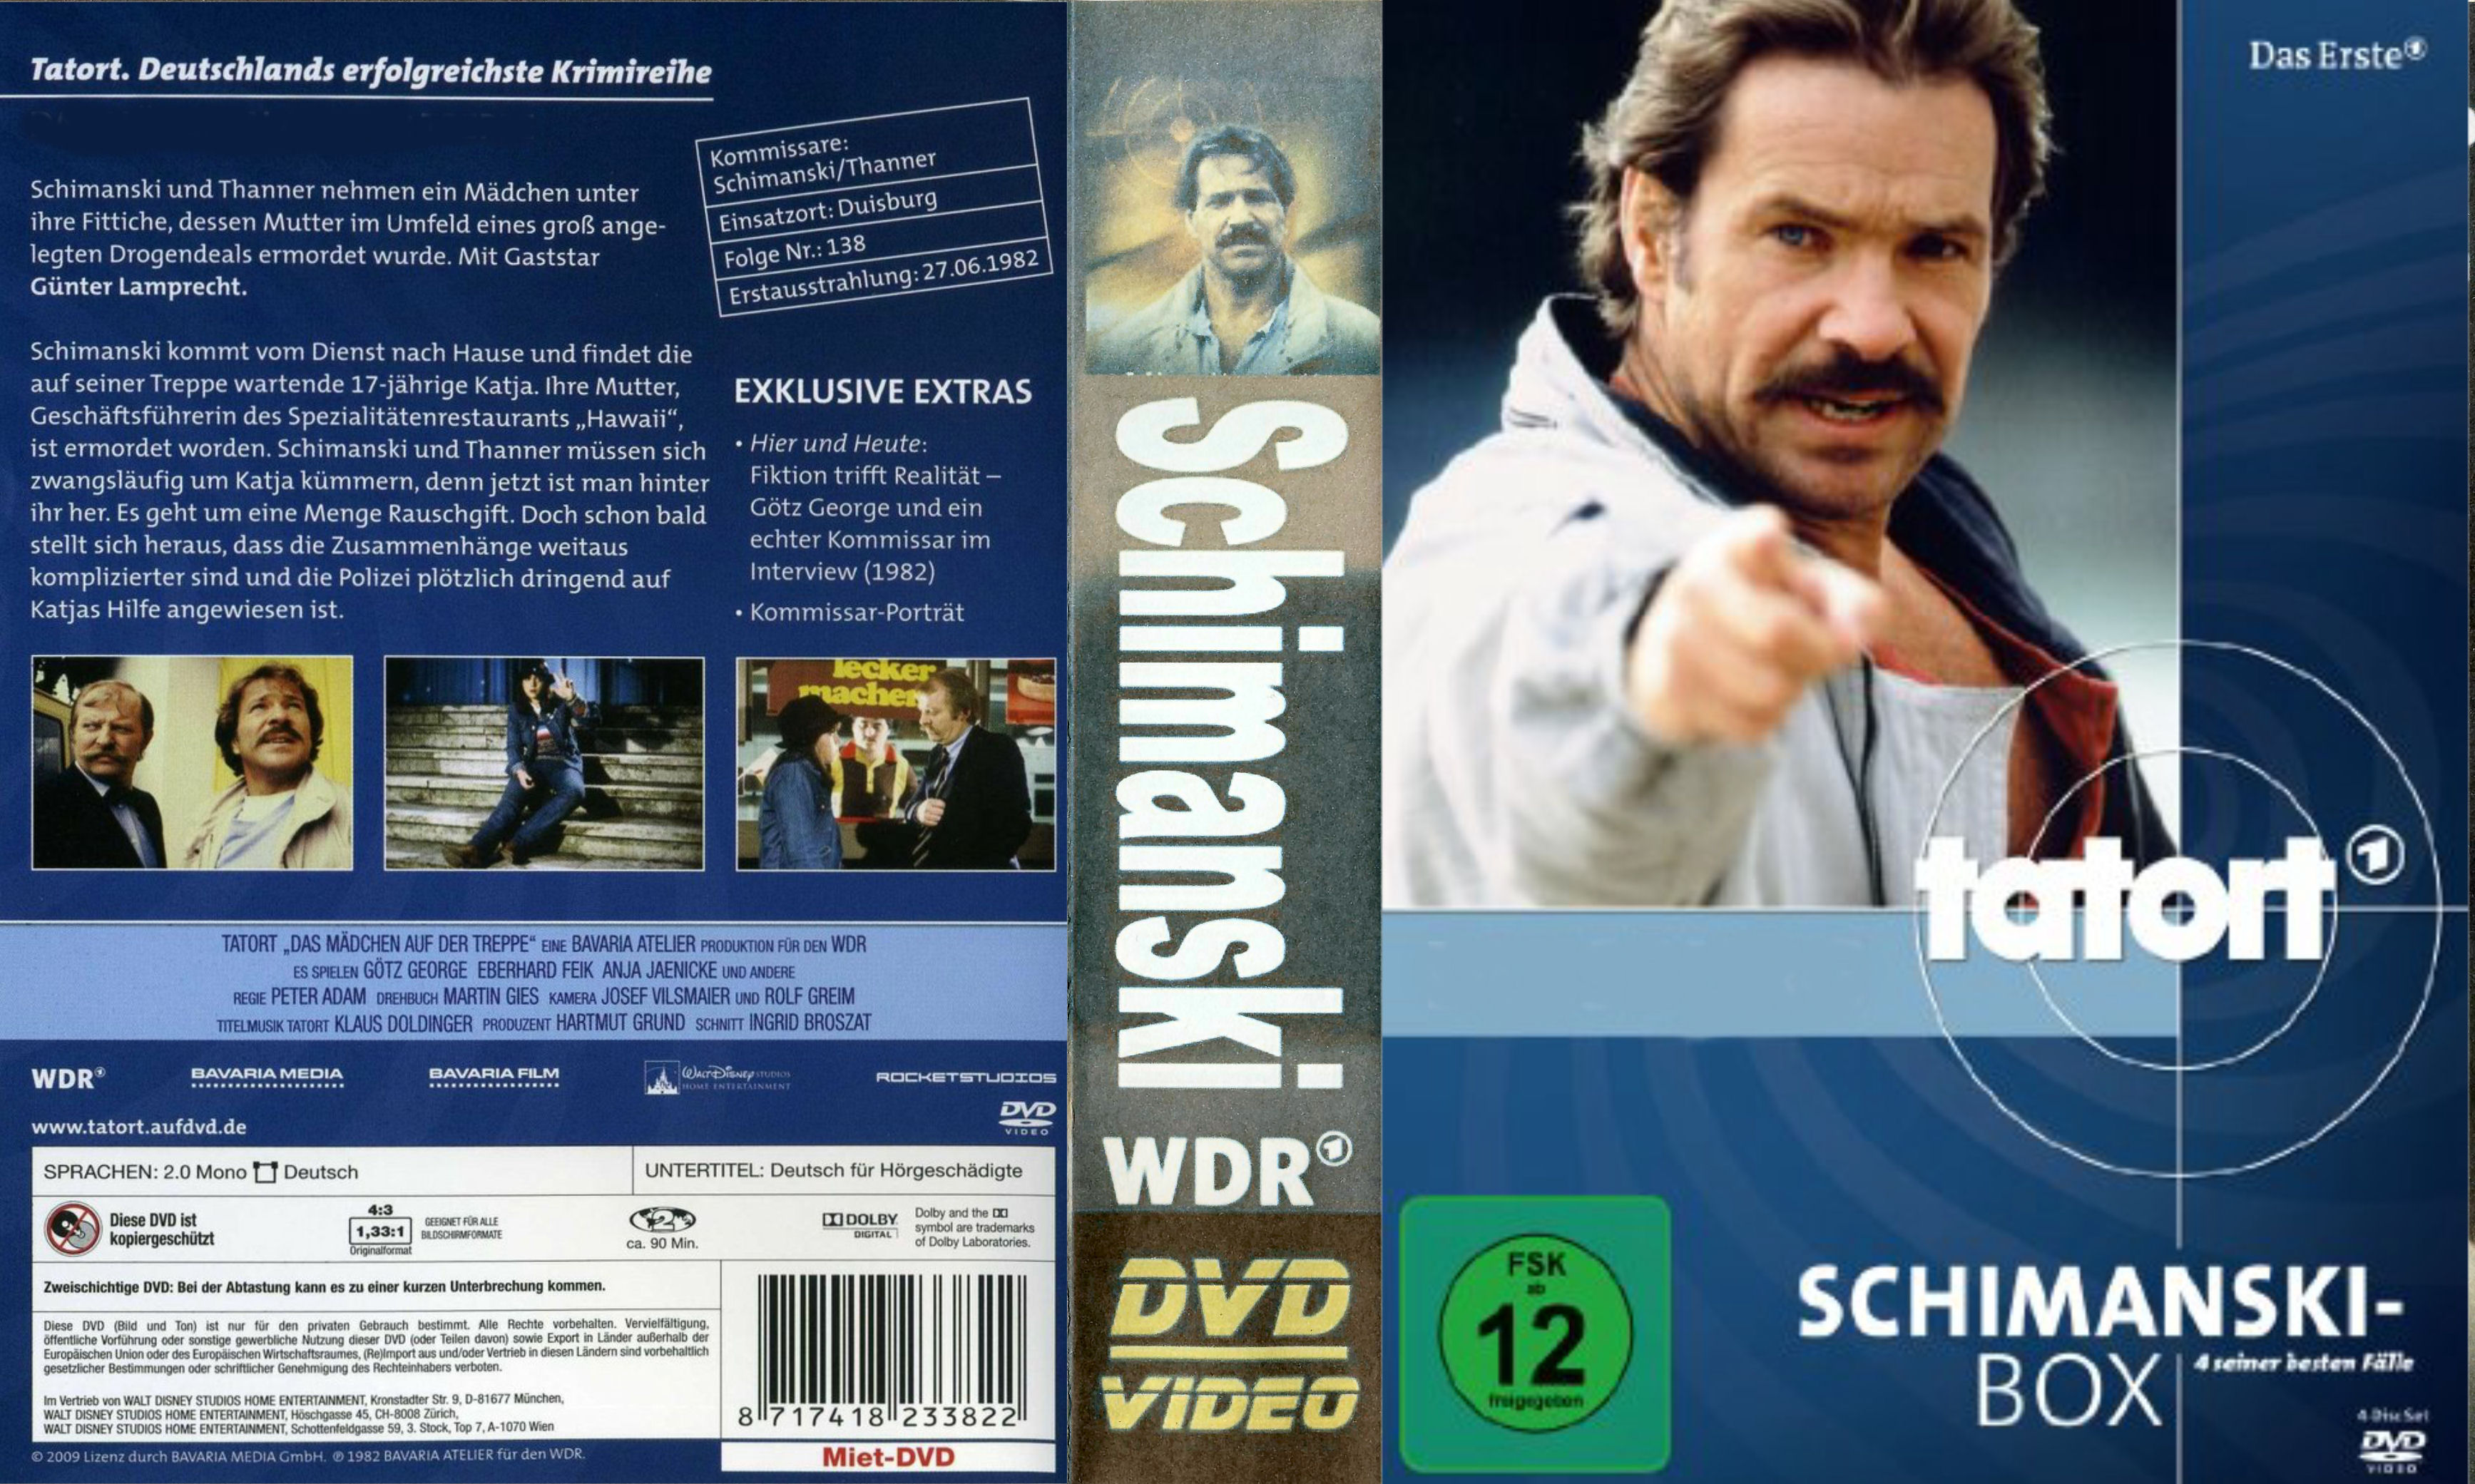 Schimanski Collectie Tatort No Subs - DvD 19